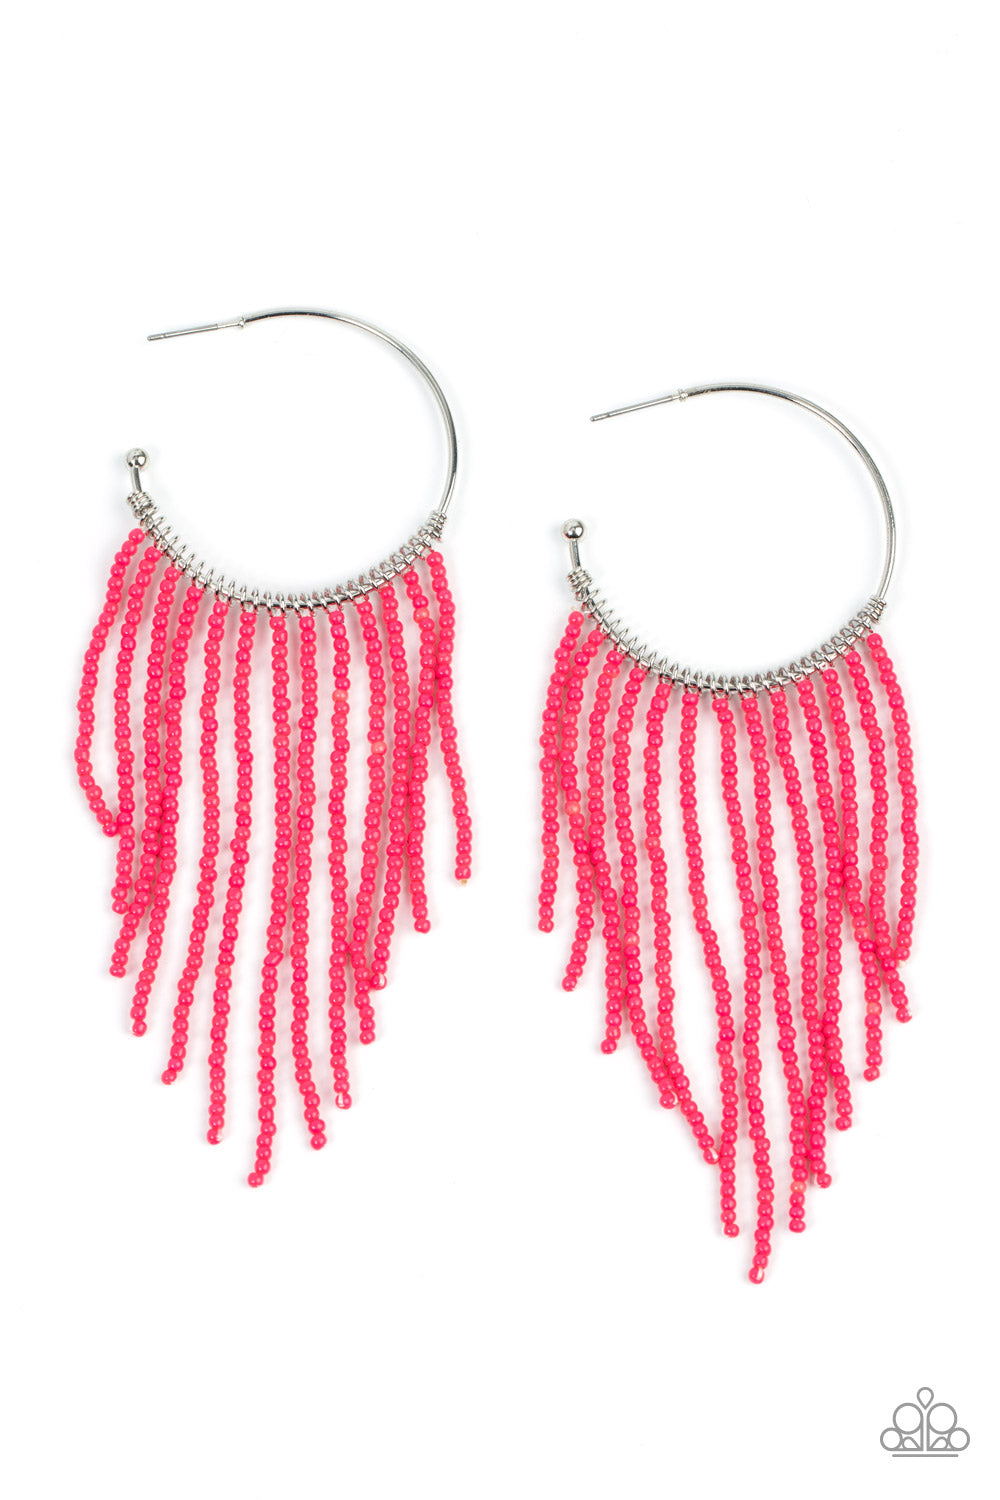 Paparazzi Earrings - Saguaro Breeze - Pink